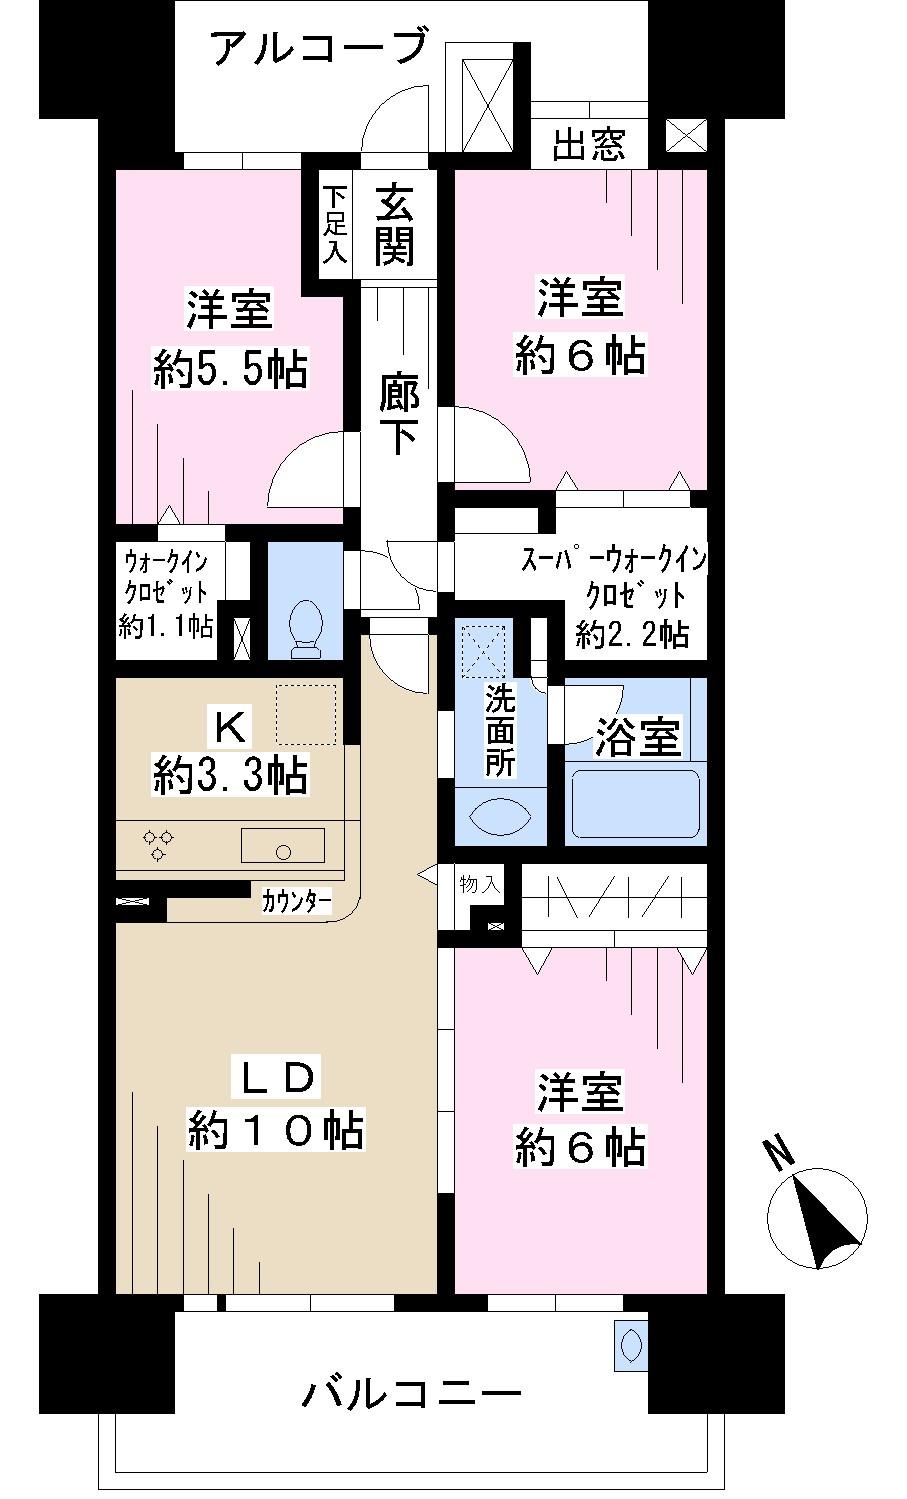 Floor plan. 3LDK, Price 26,800,000 yen, Occupied area 70.76 sq m , Balcony area 12.2 sq m